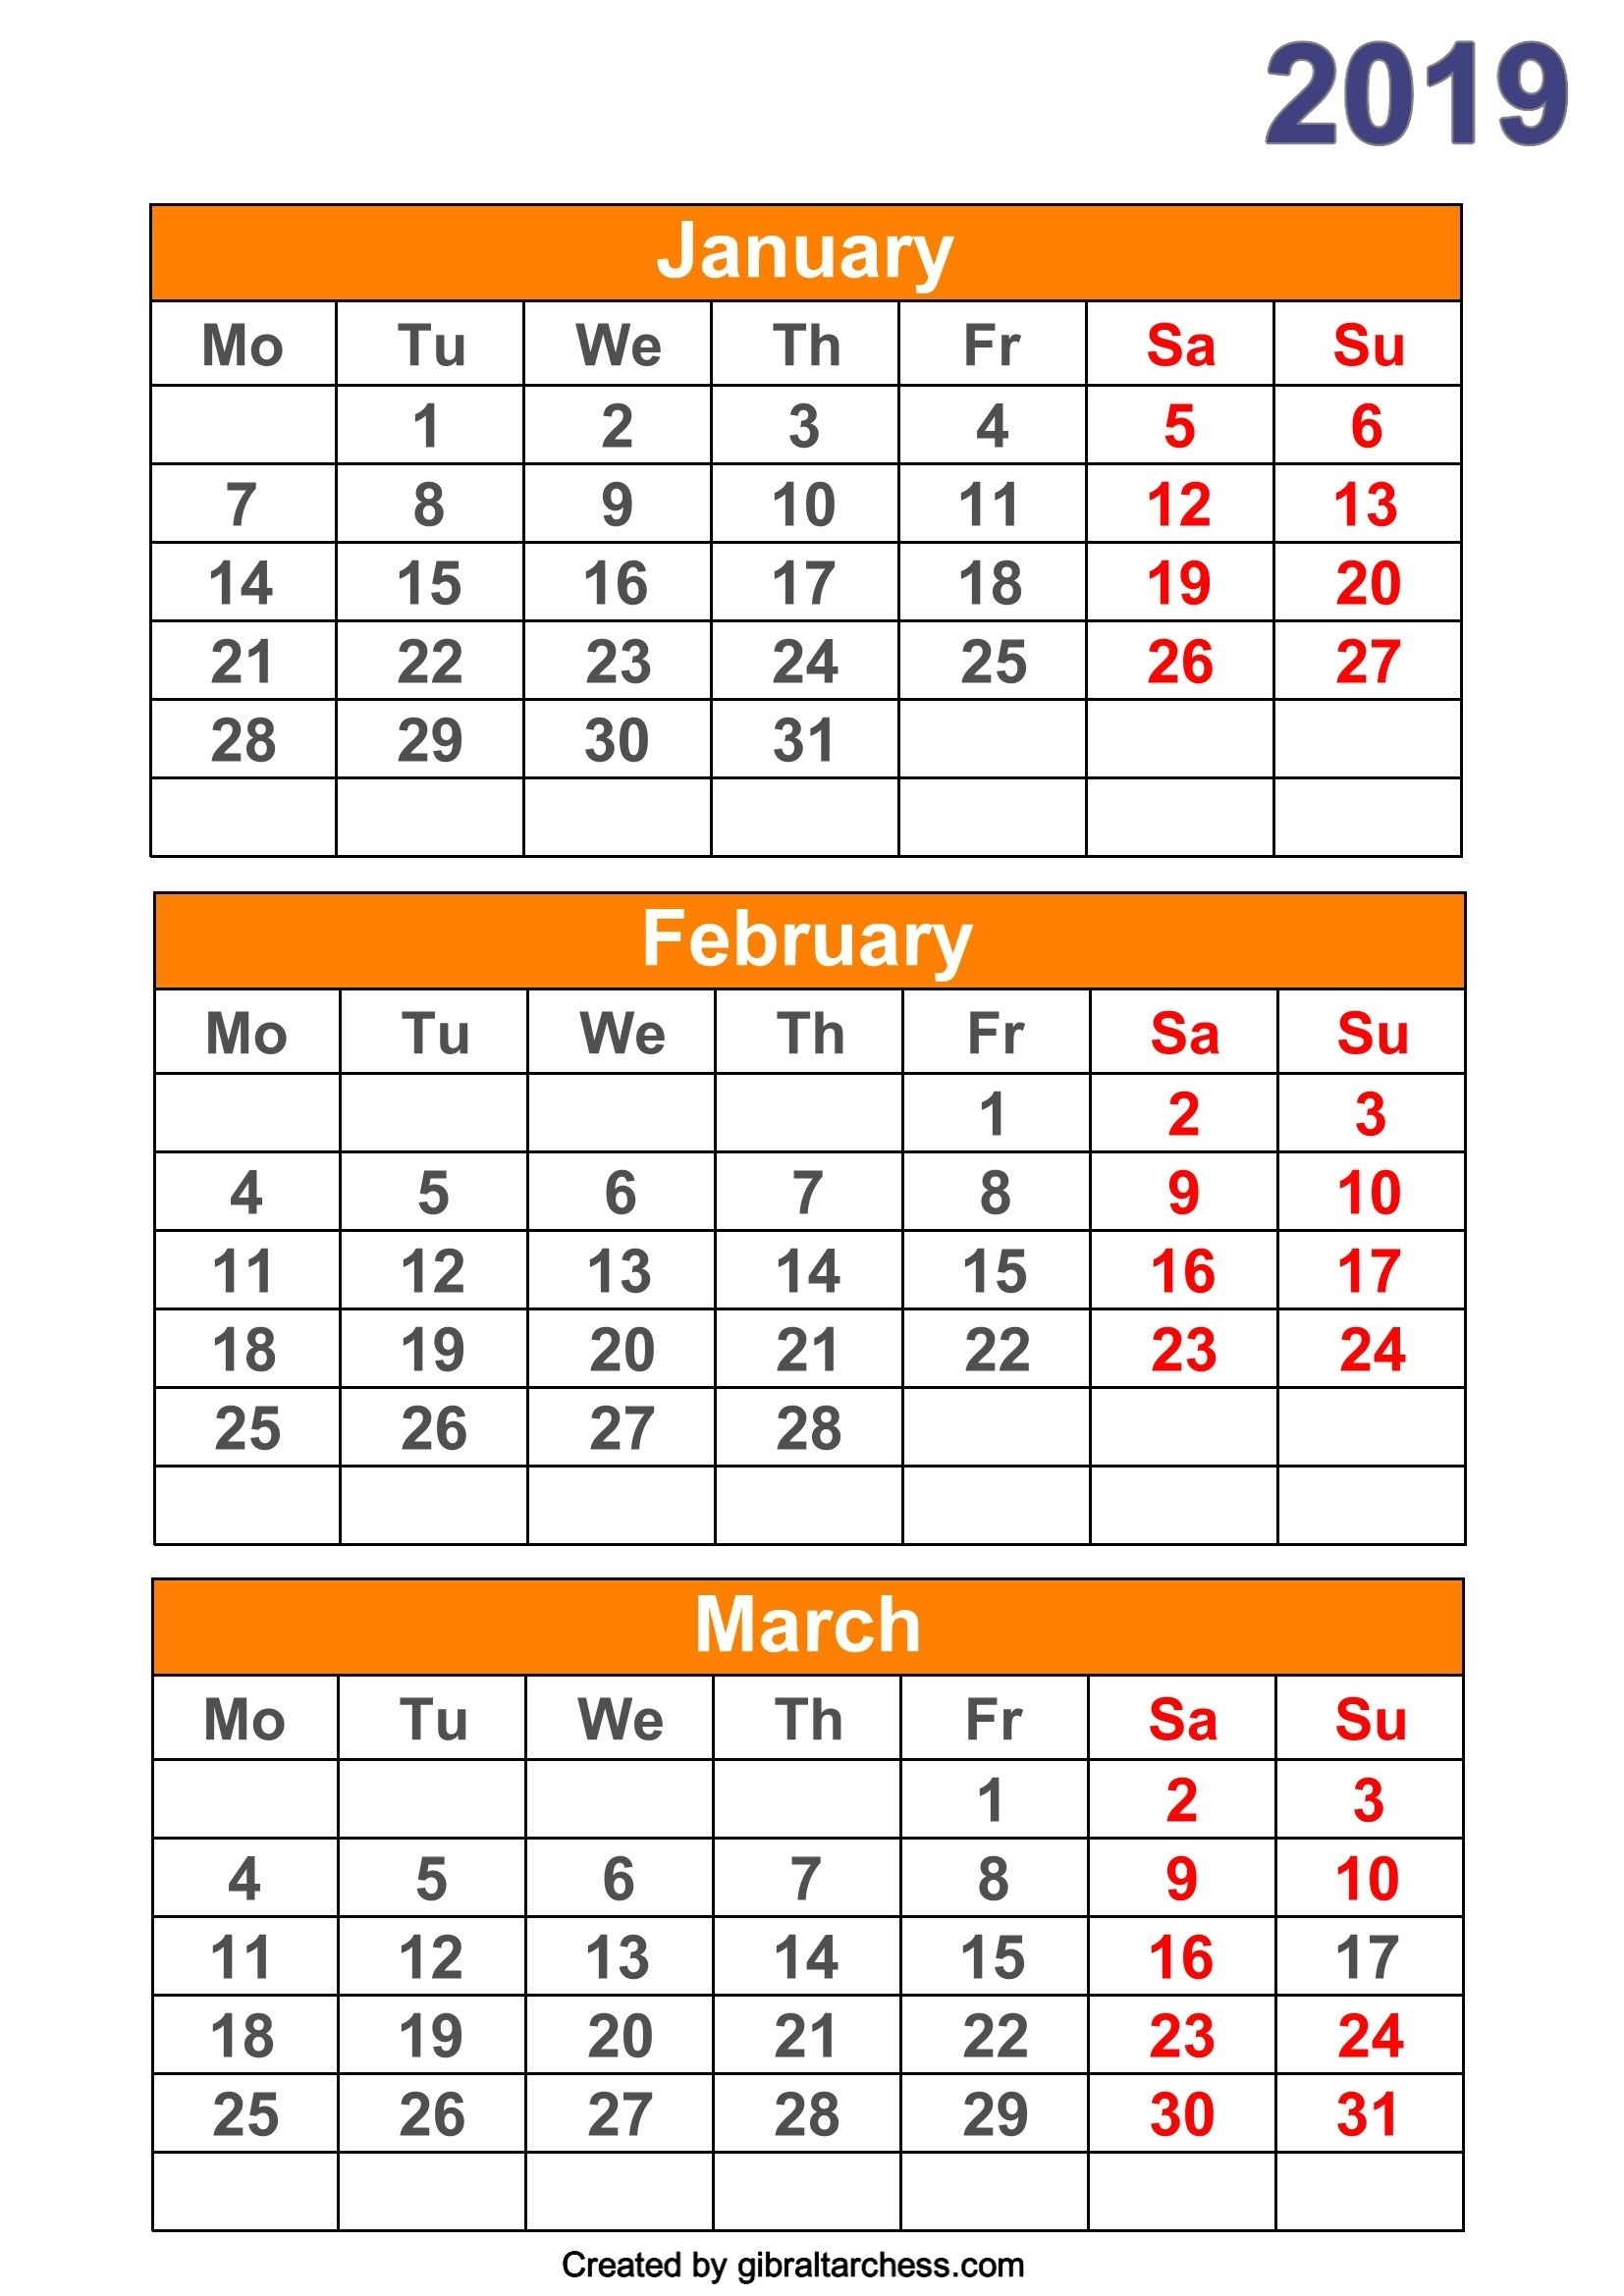 2019 Calendar 4 Months Per Page Printable | 2019 Calendar Perky Printable 4 To A Page Calendar